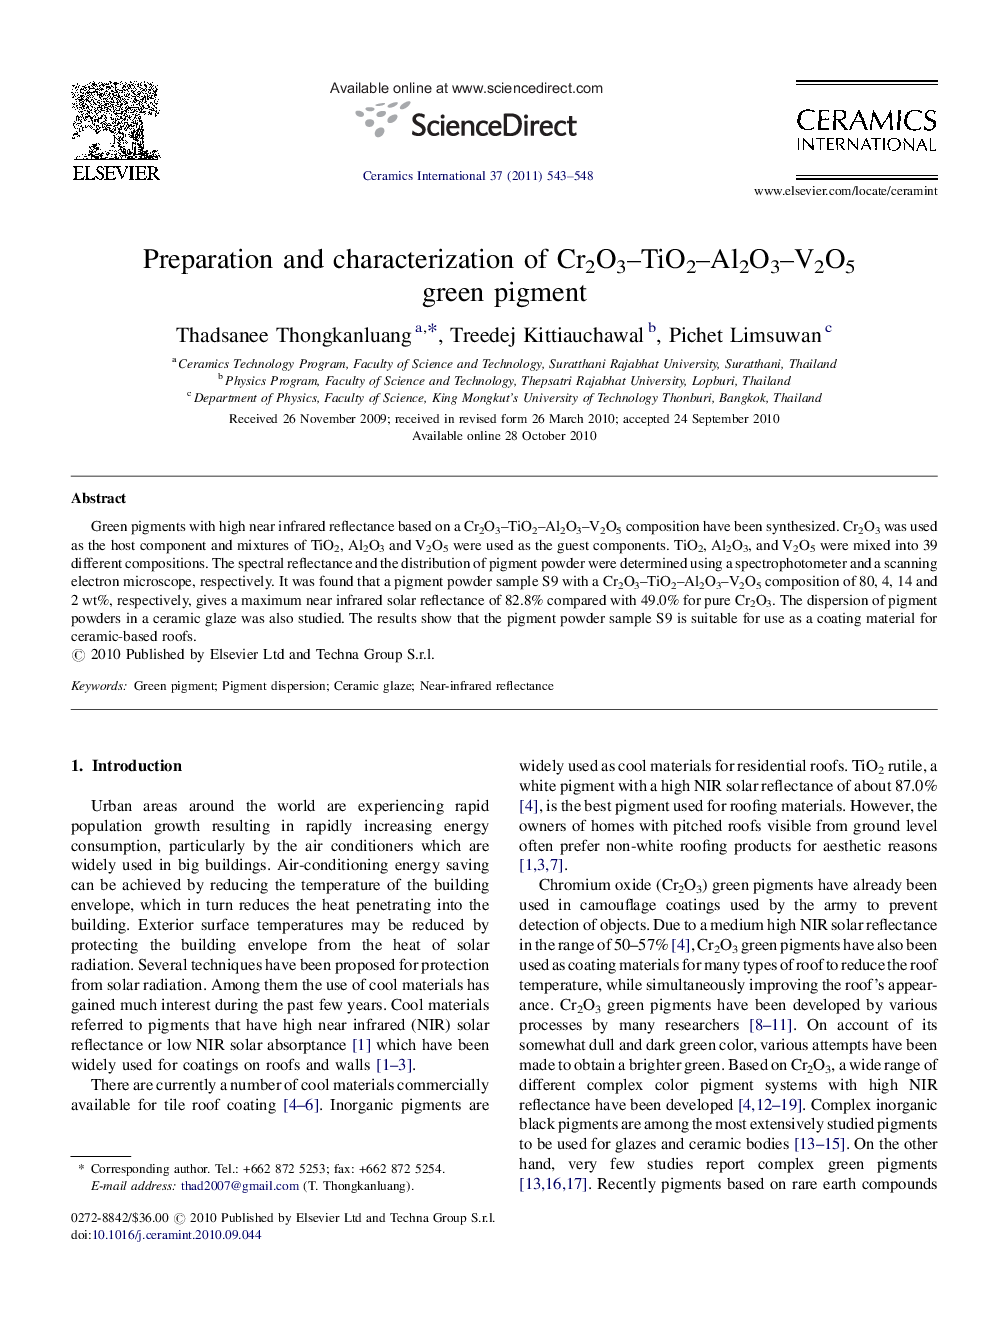 Preparation and characterization of Cr2O3–TiO2–Al2O3–V2O5 green pigment